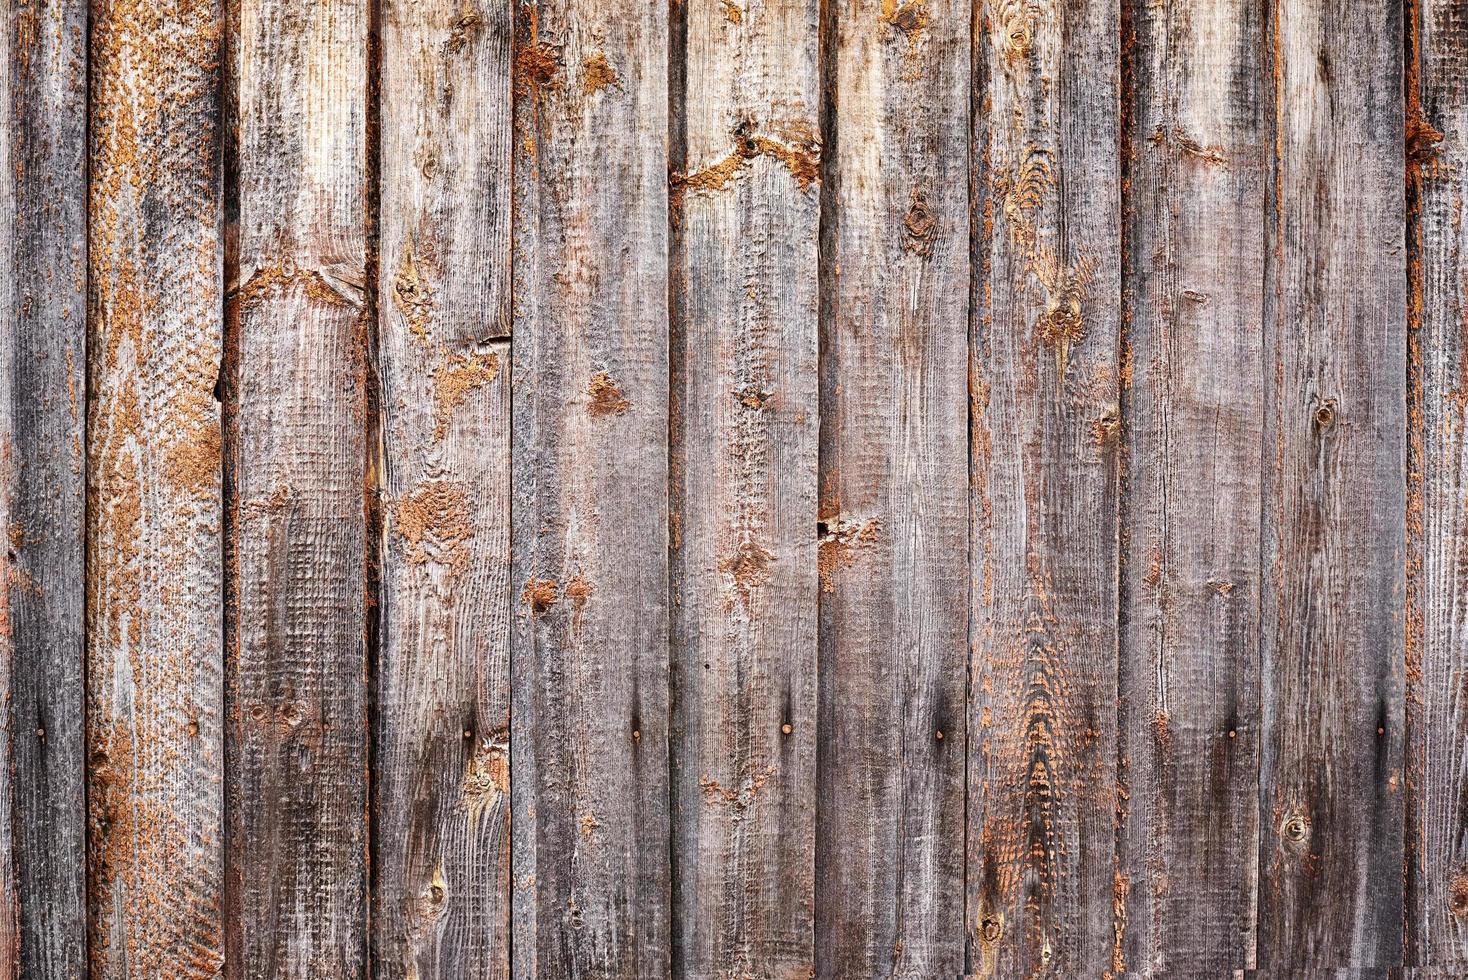 textura de madera vieja. un fondo de tablones de madera grunge oscuro foto